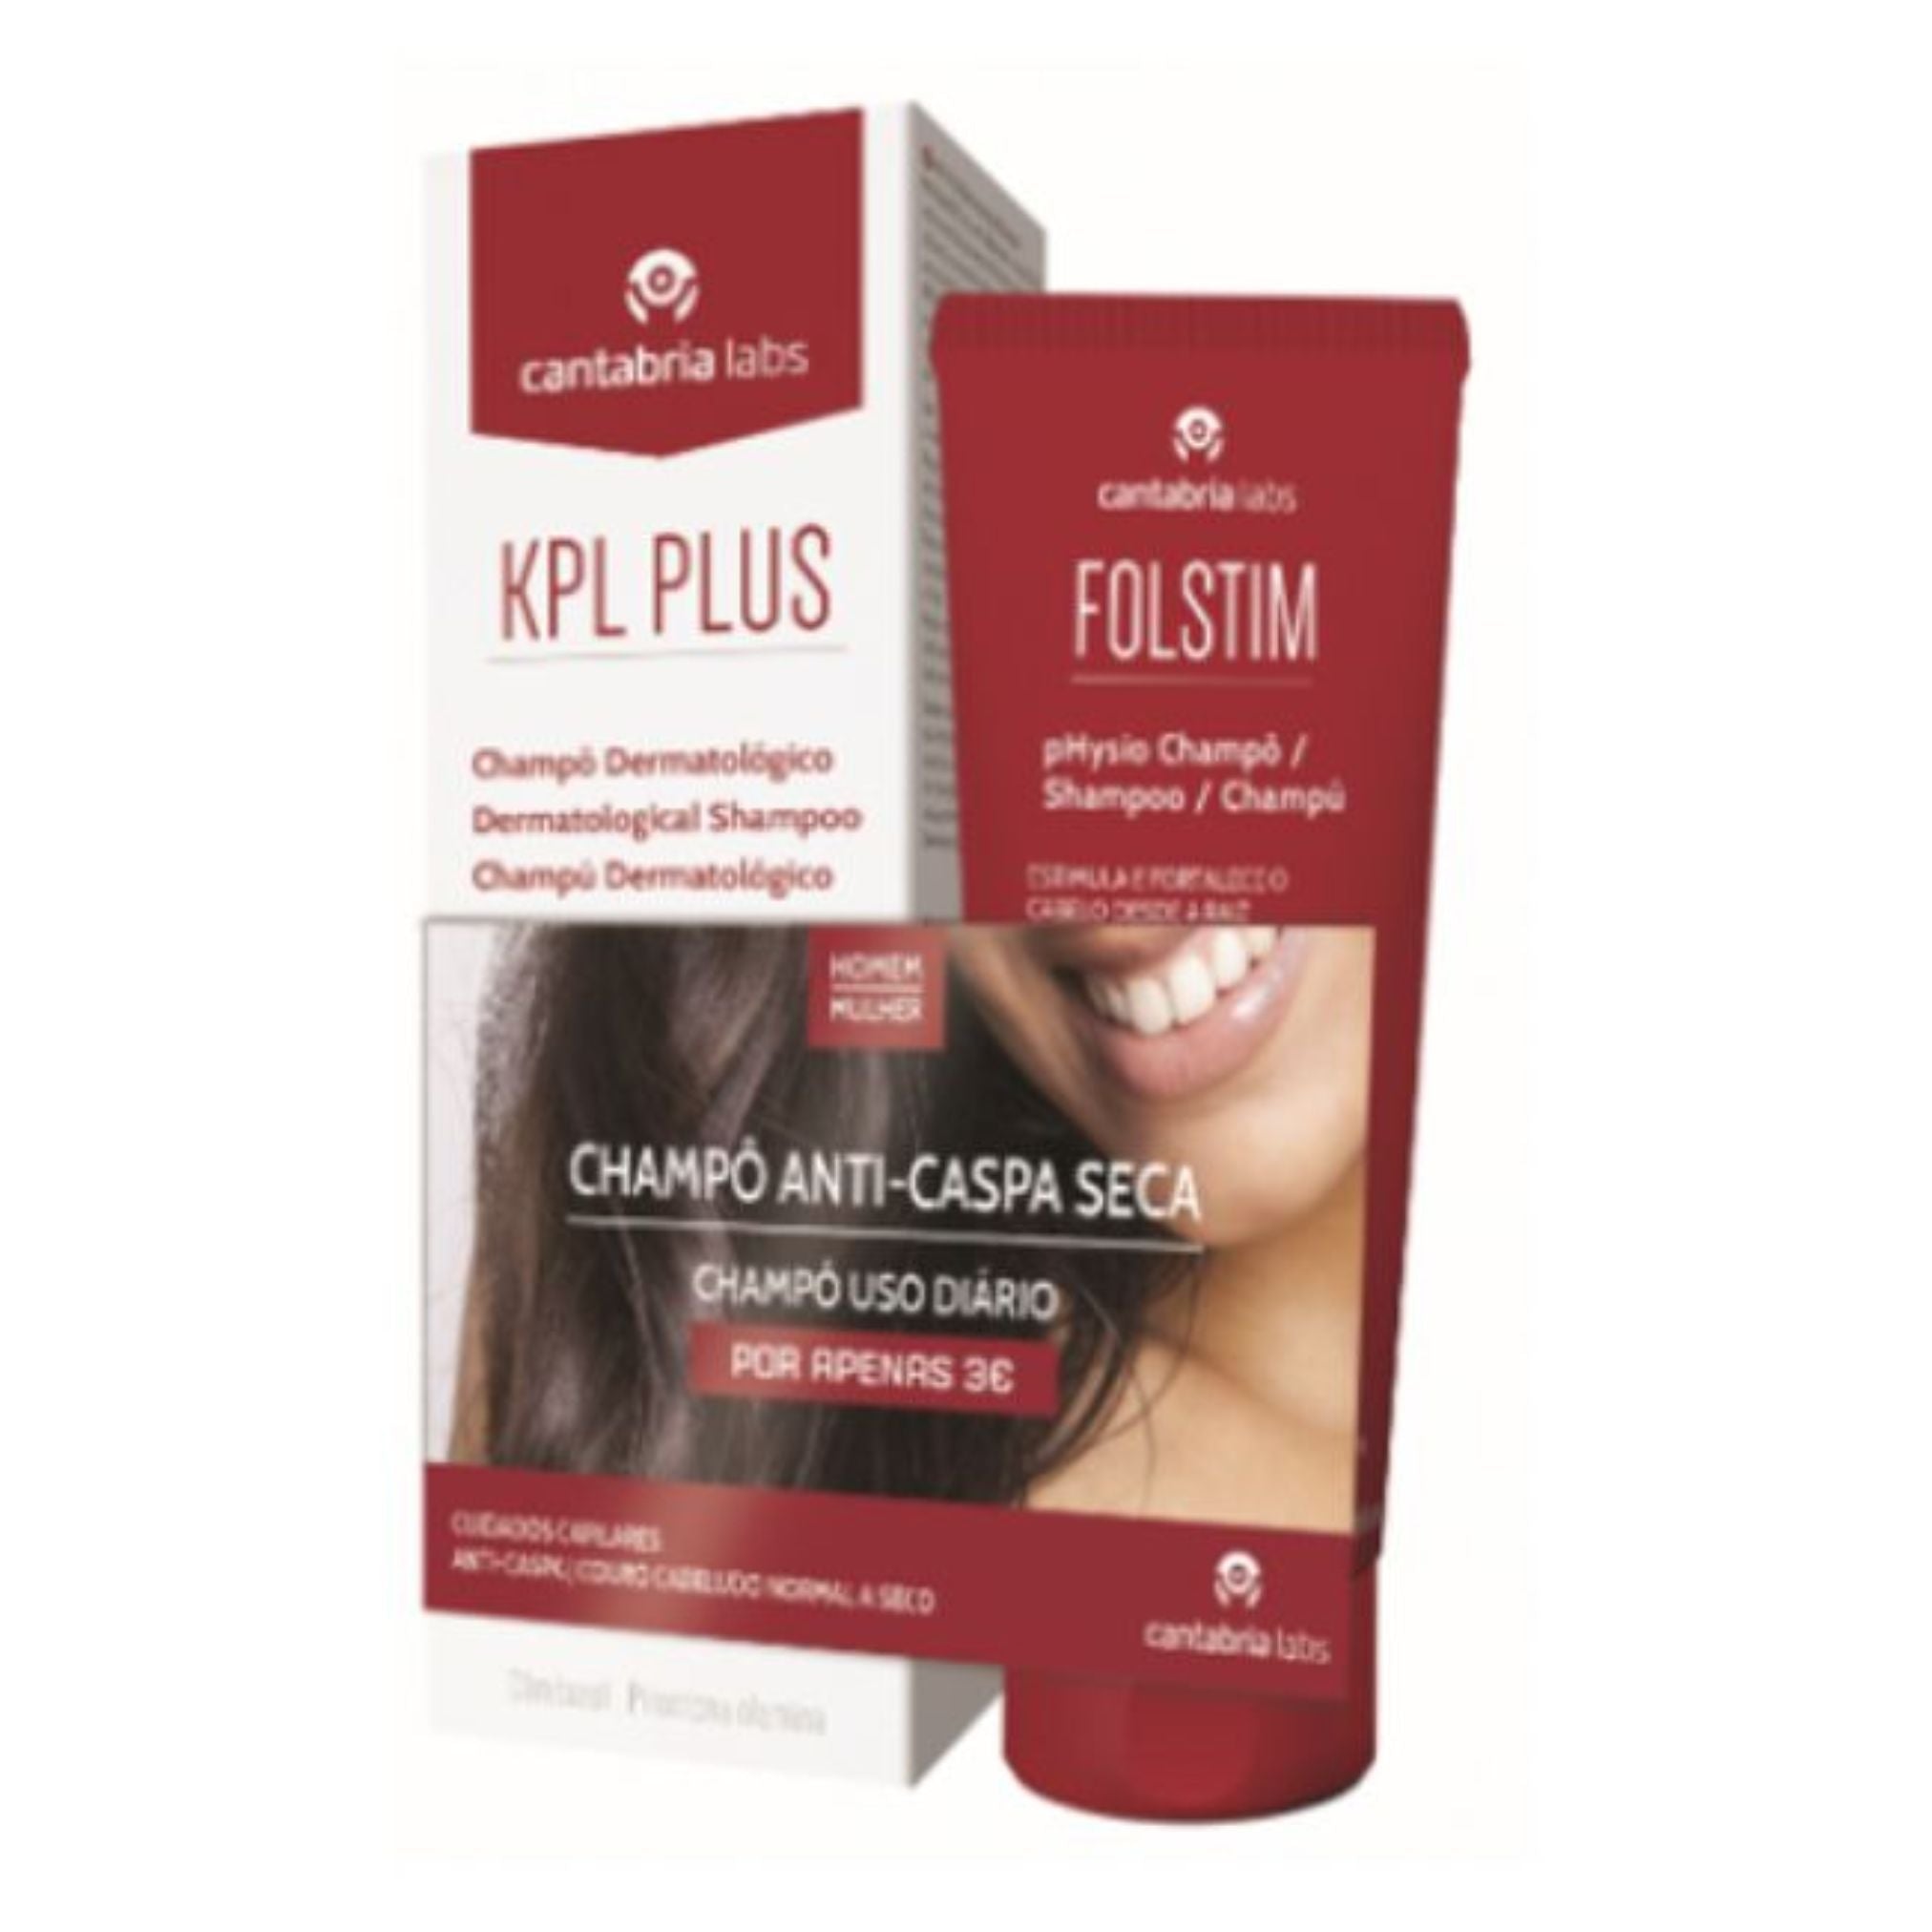 KPL Plus Dermatological Anti-Seborrheic Anti-Dandruff Shampoo 200ml + Folstim pHysio Shampoo 200ml